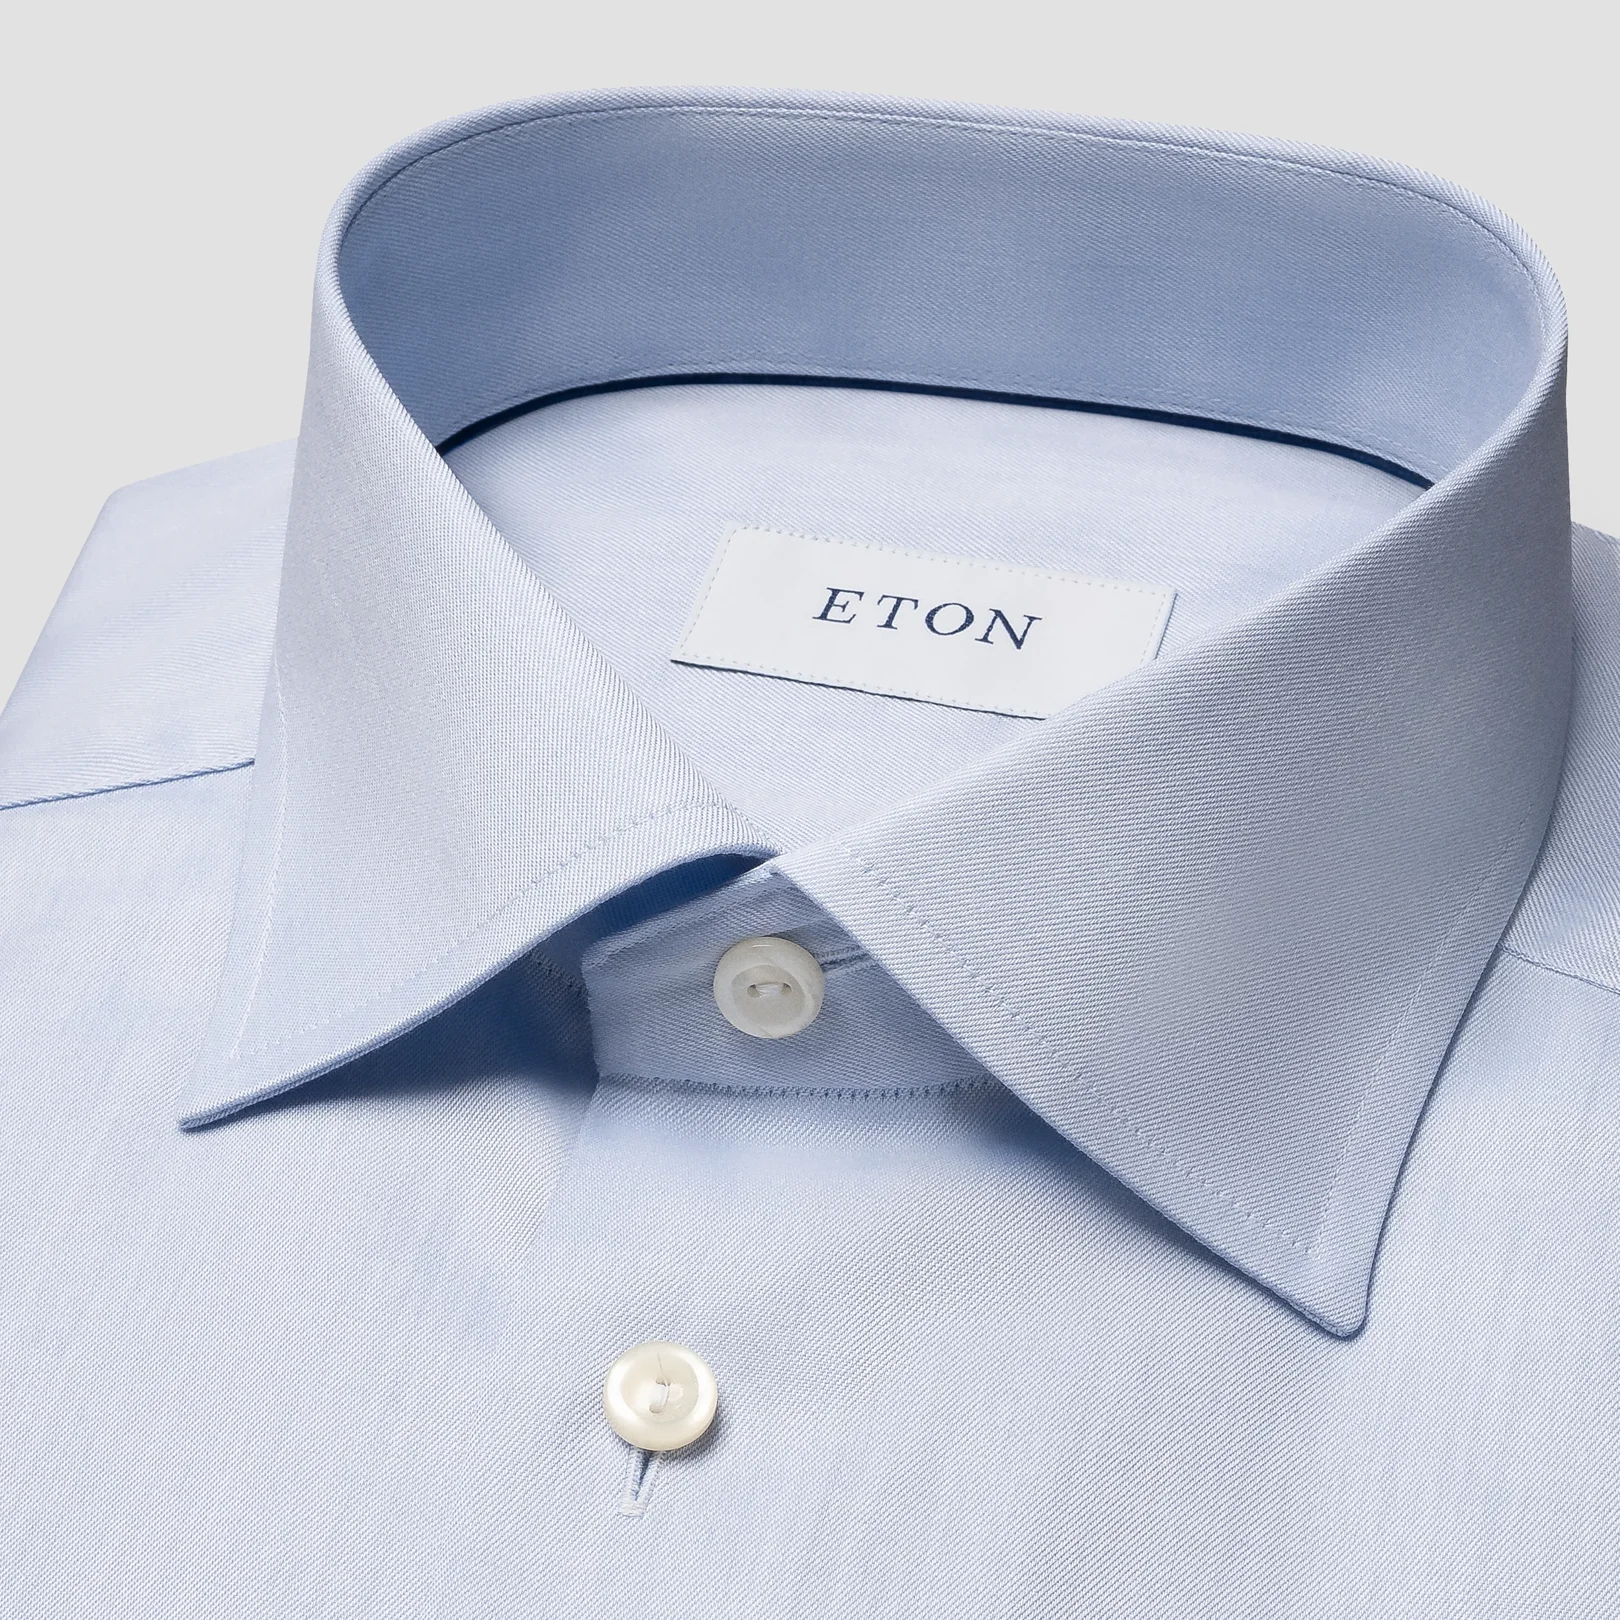 Eton - light blue shirt signature twill